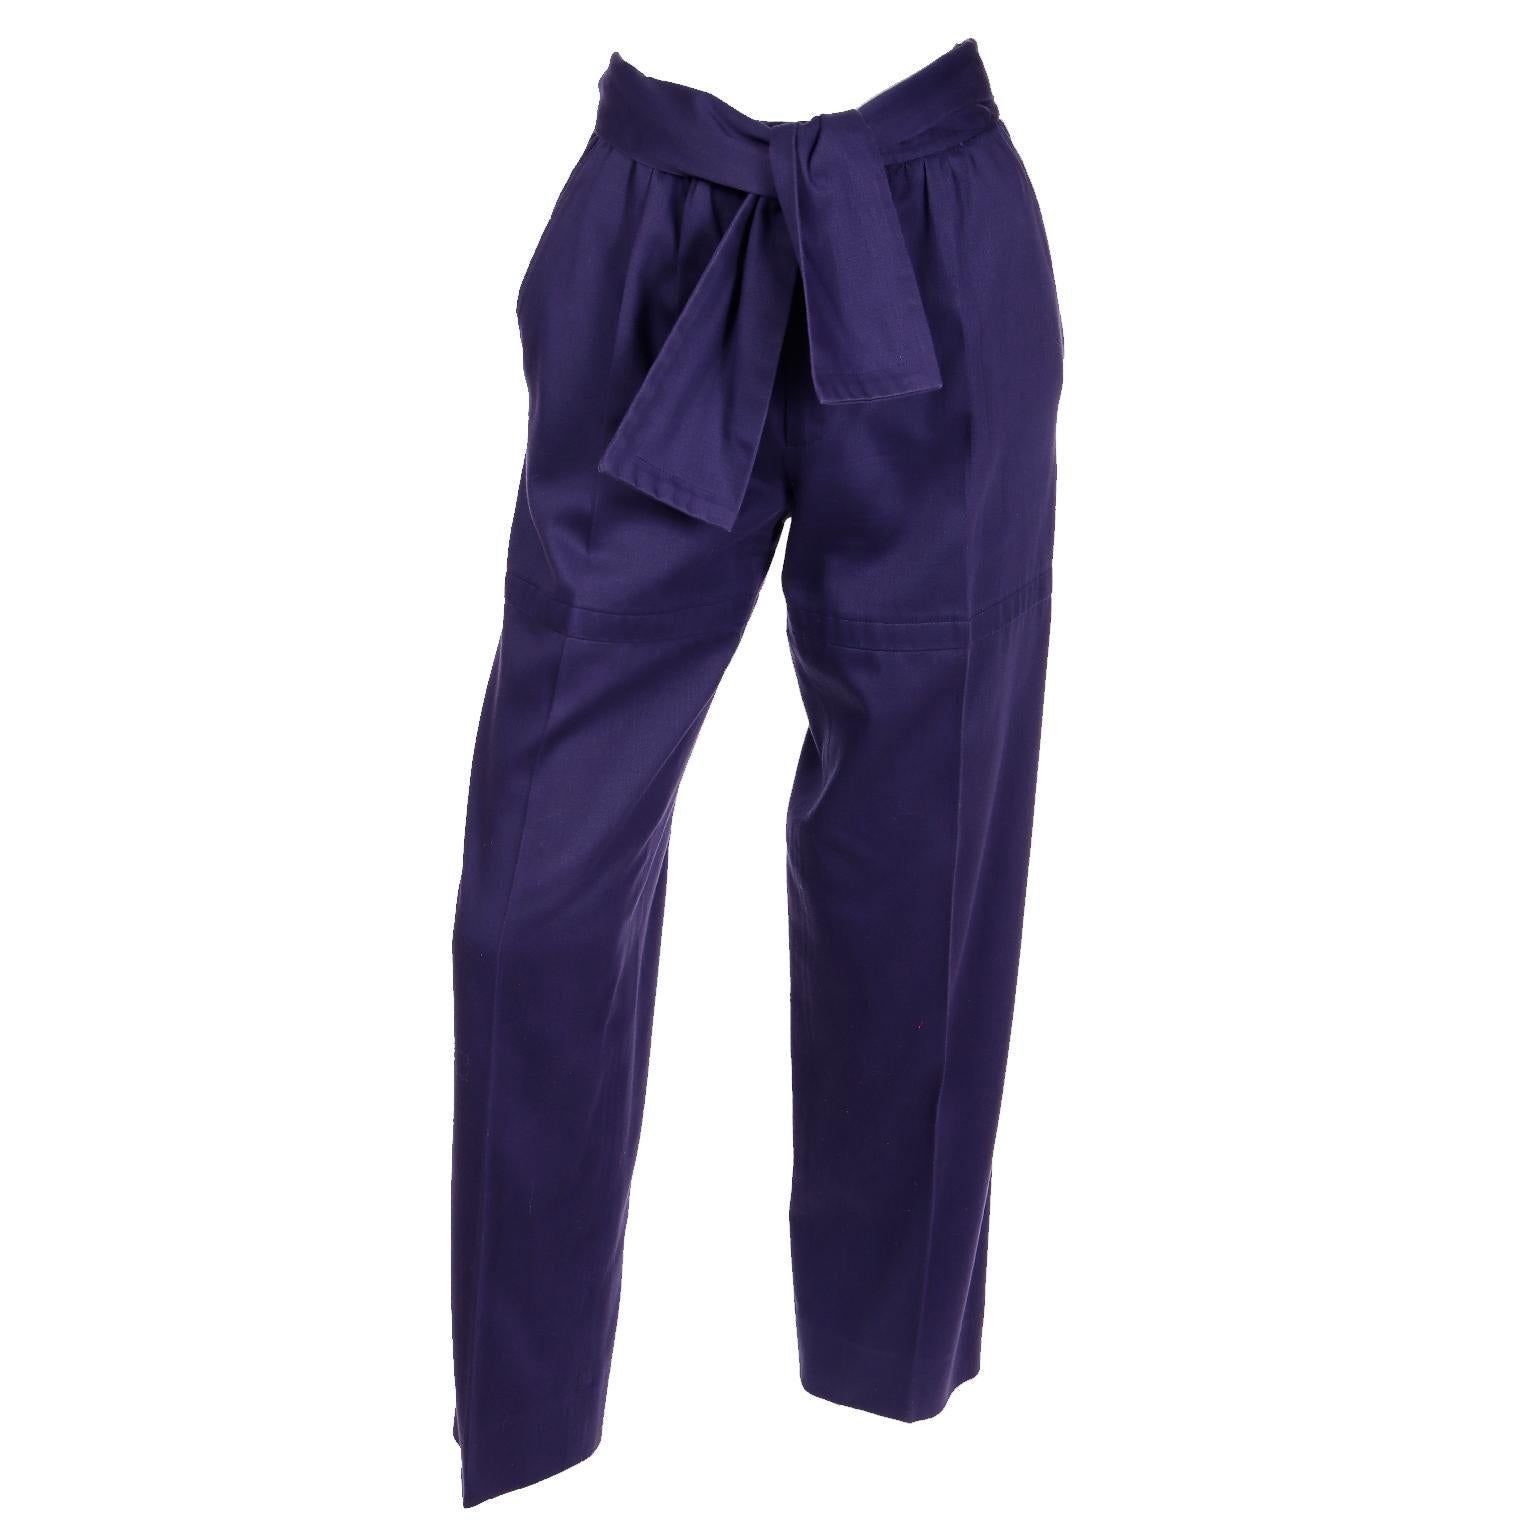 Yves Saint Laurent YSL Vintage Deep Purple Cotton Trousers W Self Tie Sash Belt